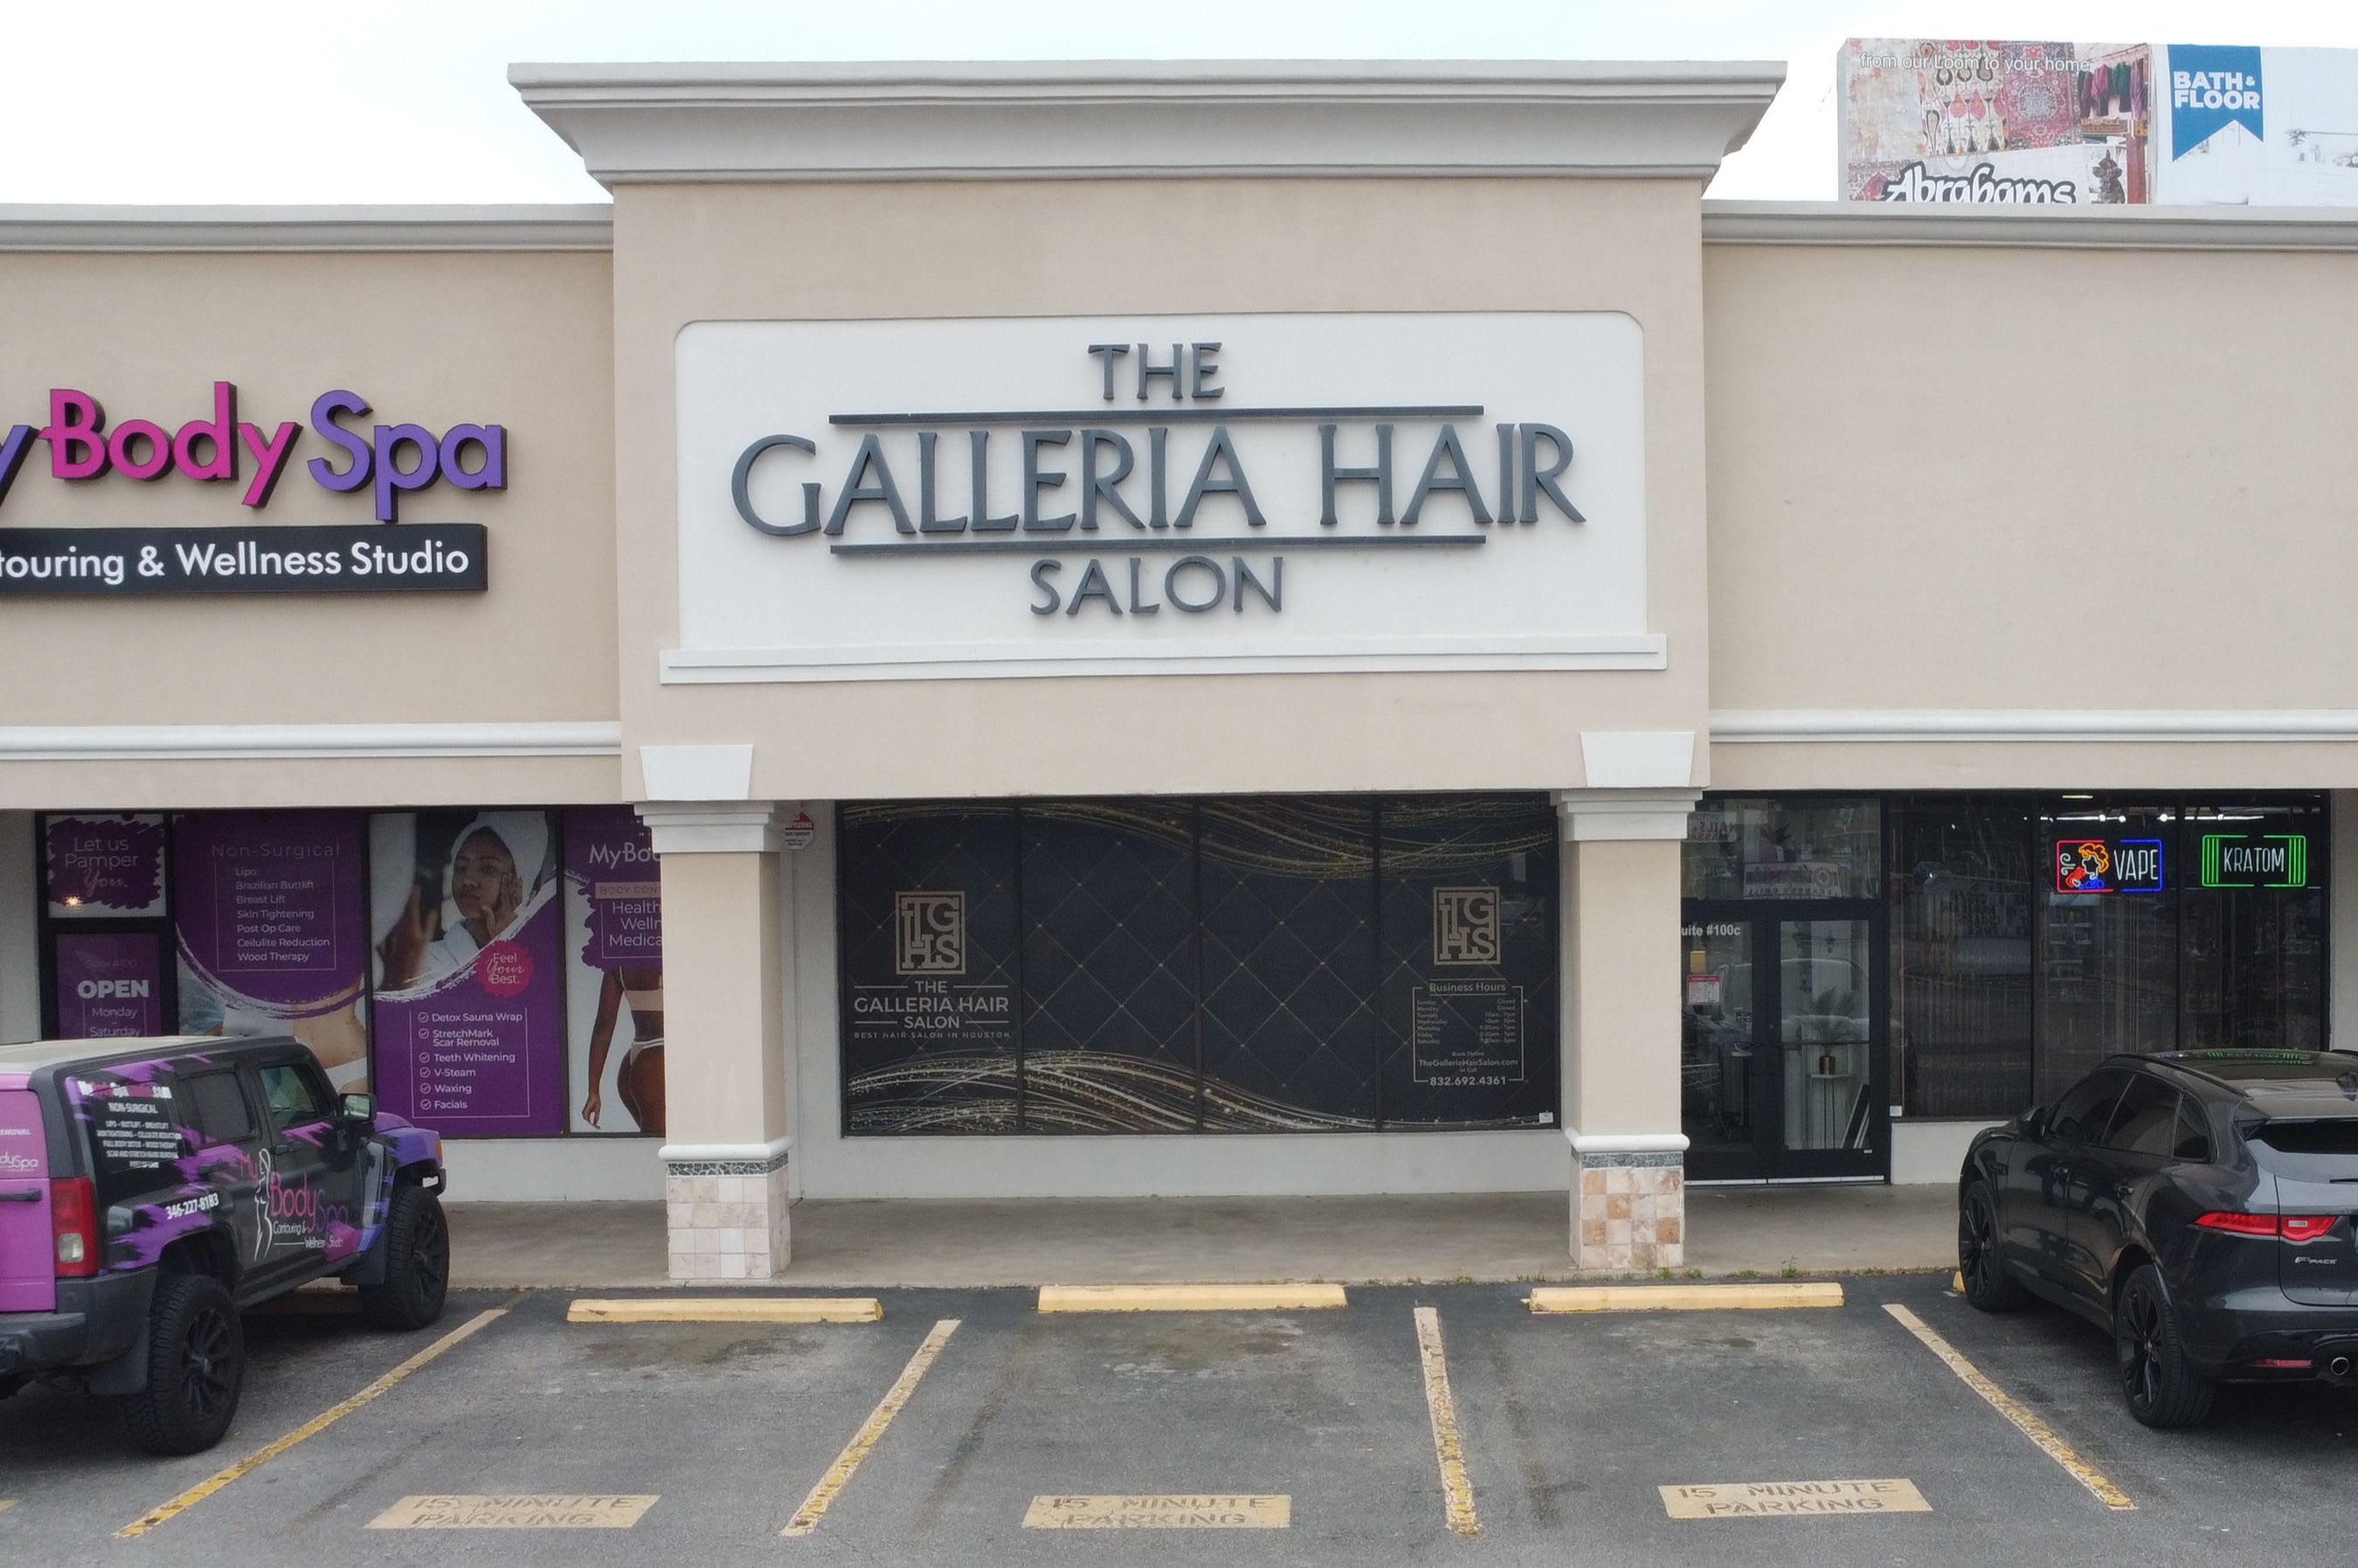 The Galleria Hair Salon - The Best Hair Salon in Houston